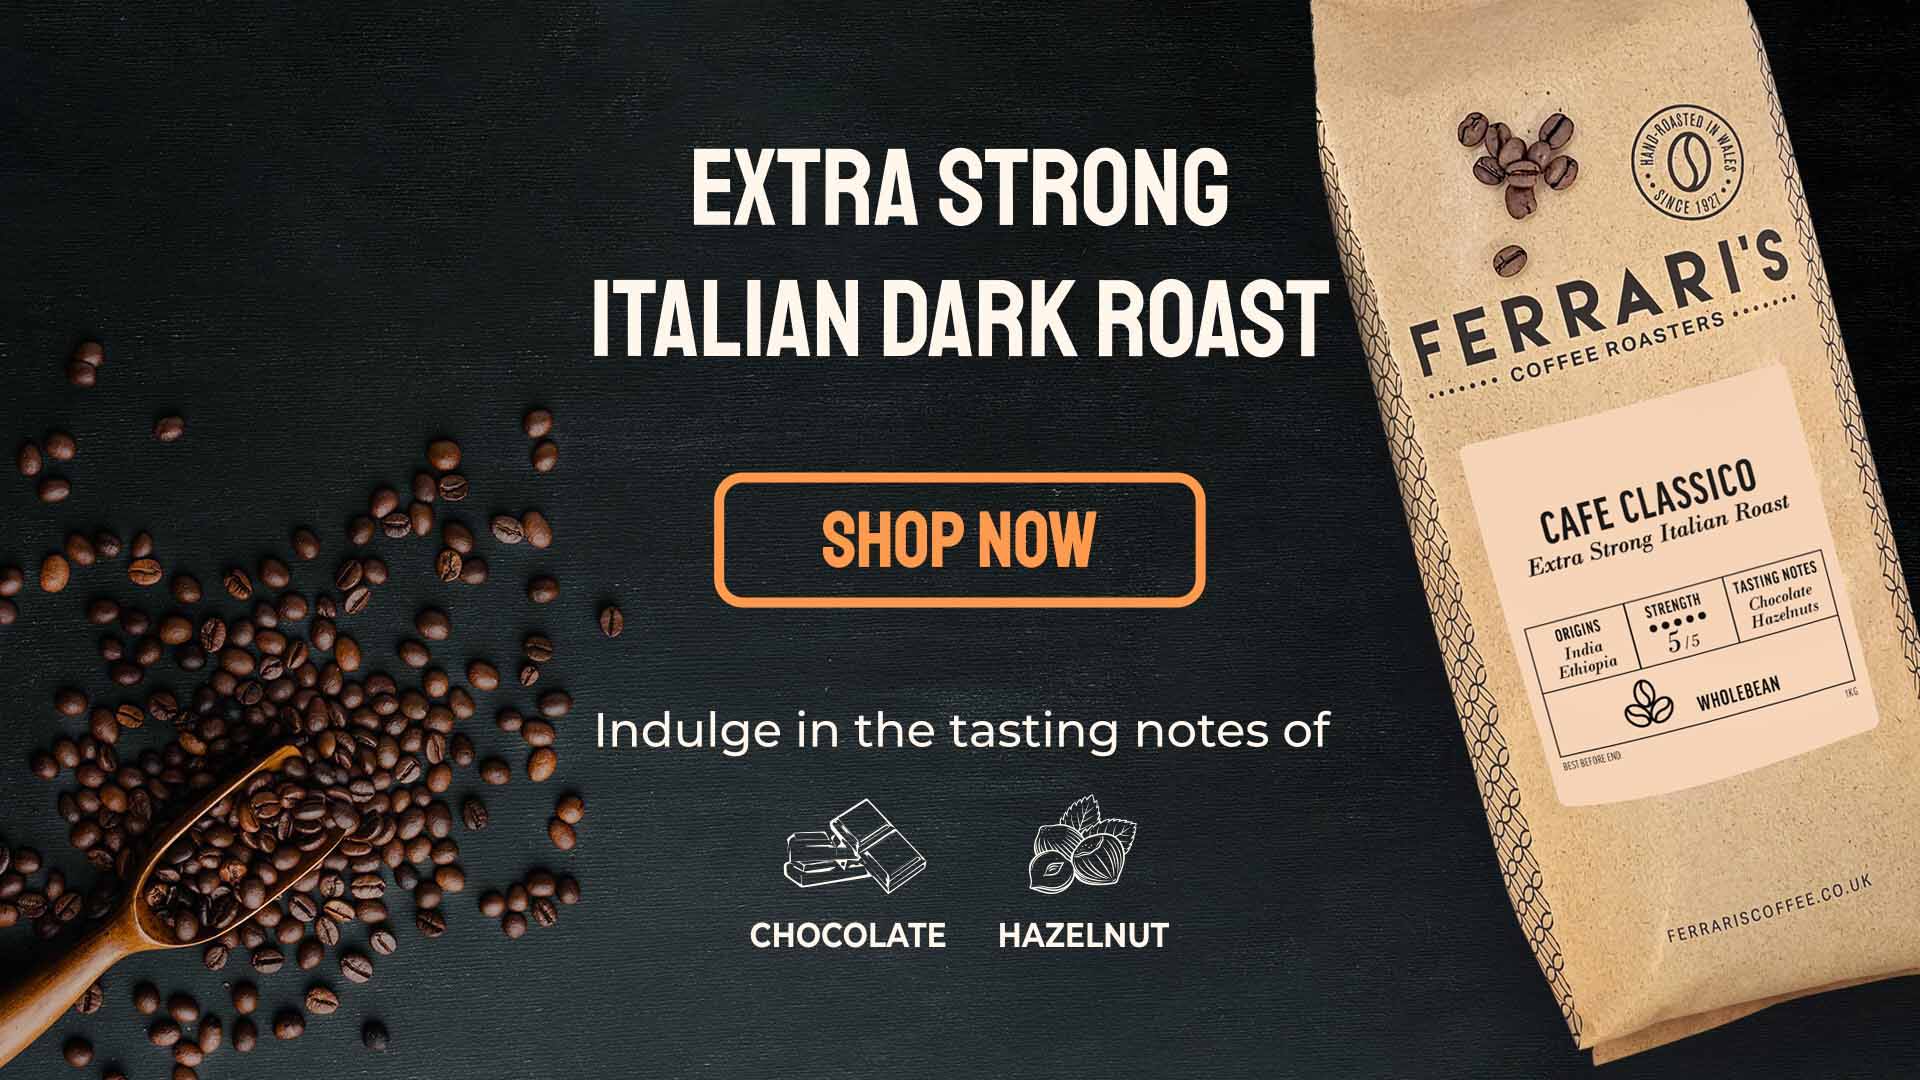 Ferrari's Coffee, Cafe Classico, Extra Strong Italian Dark Roast